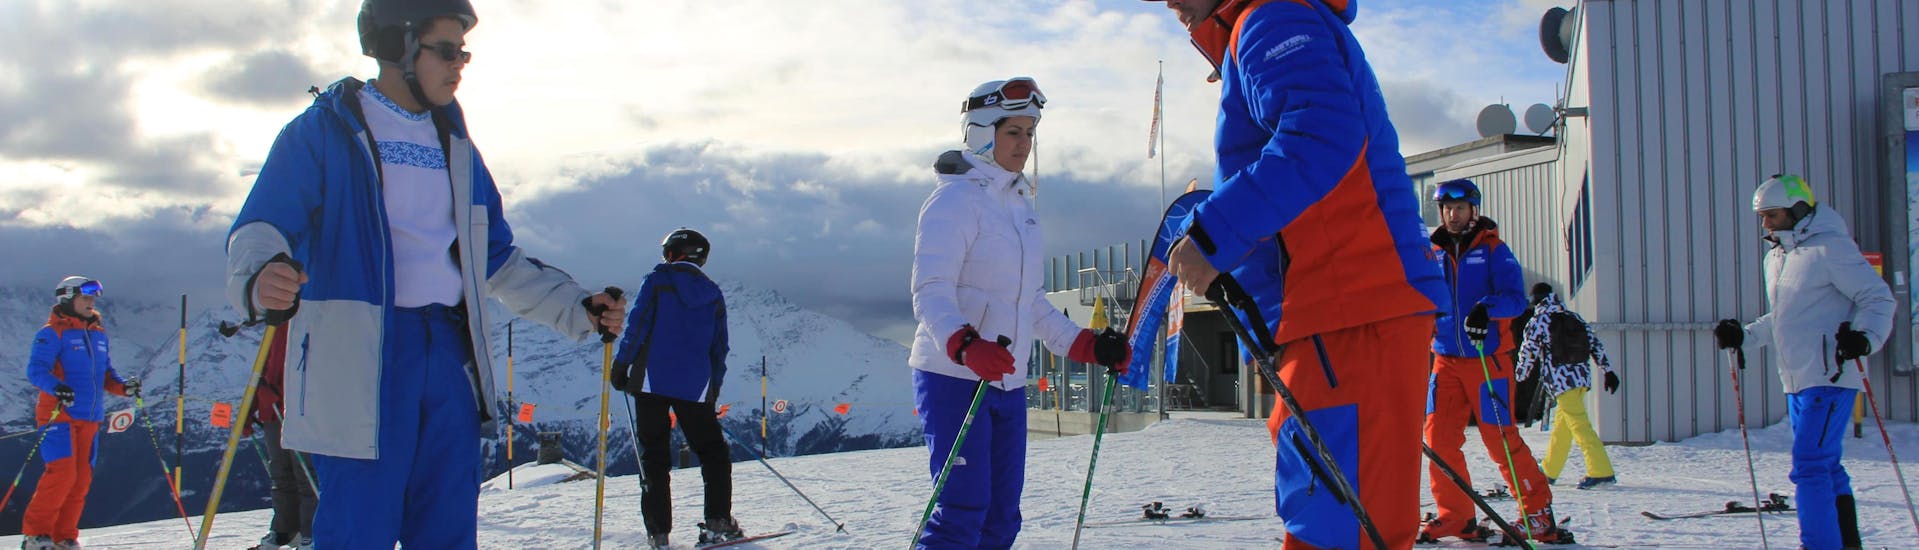 Teen & Adult Ski Lessons for All Levels from Ski School Tzoum'Évasion La Tzoumaz.